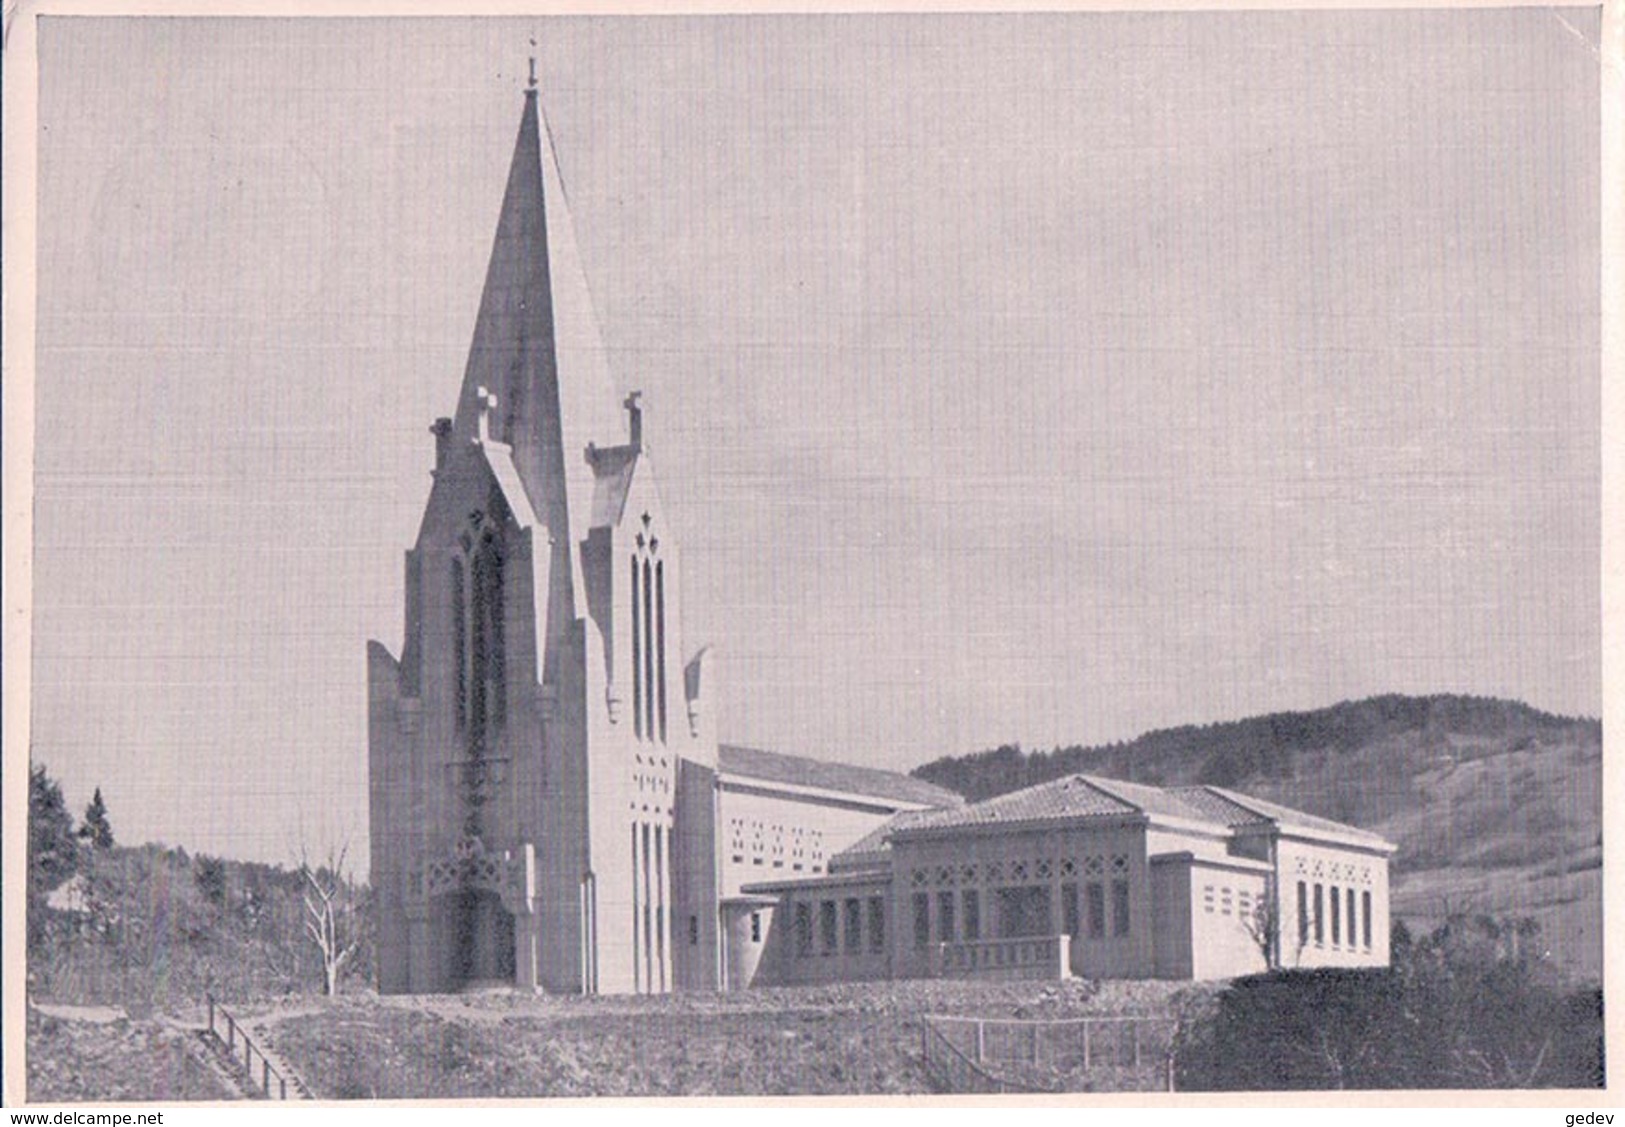 Pully VD, Eglise De Pully - Rosiaz Inaugurée Le 26.4.53, Architecte Paul Lavenex (26453) 10x15 - Pully